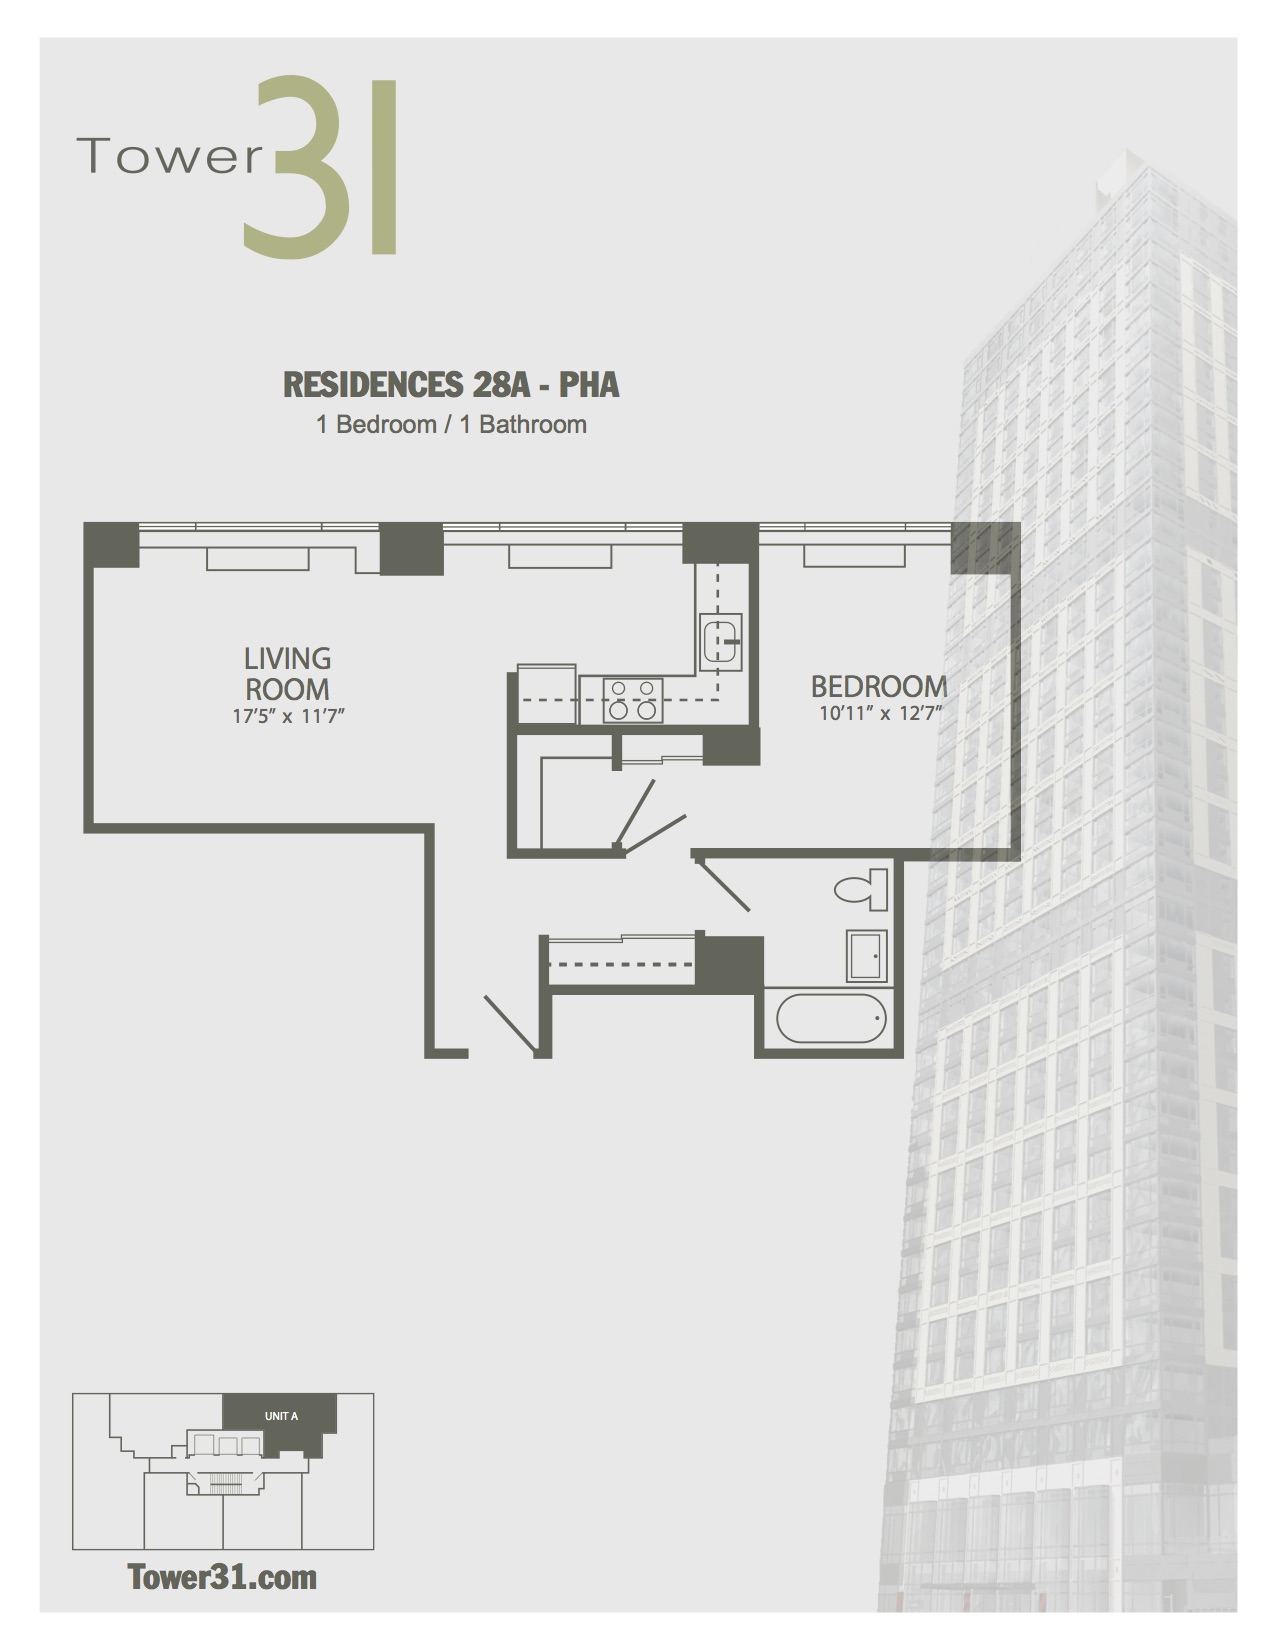 Residence A Floors 28-PH